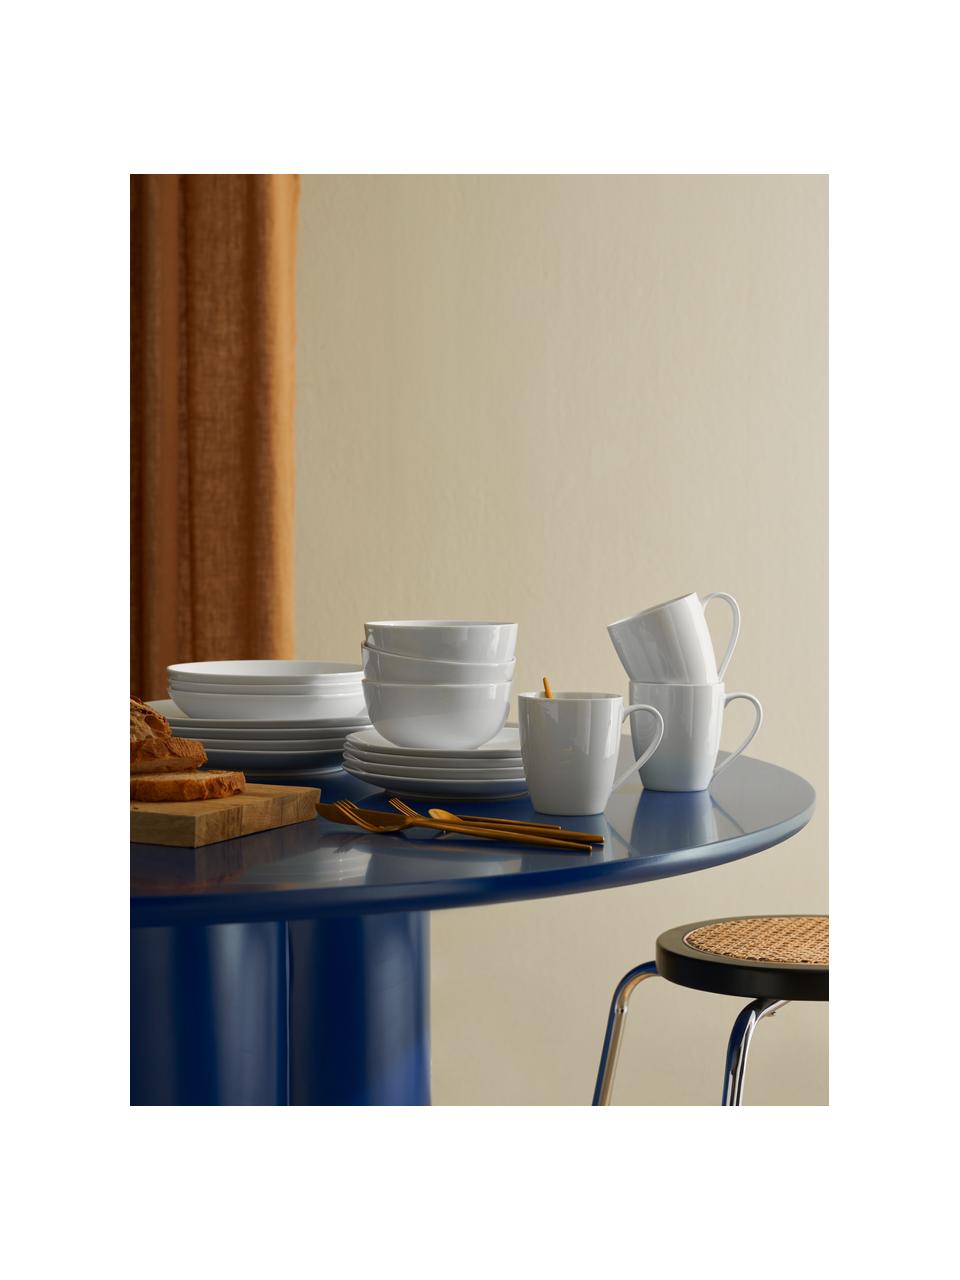 Platos de postre de porcelana Delight Modern, 2 uds., Porcelana, Blanco, Ø 20 cm